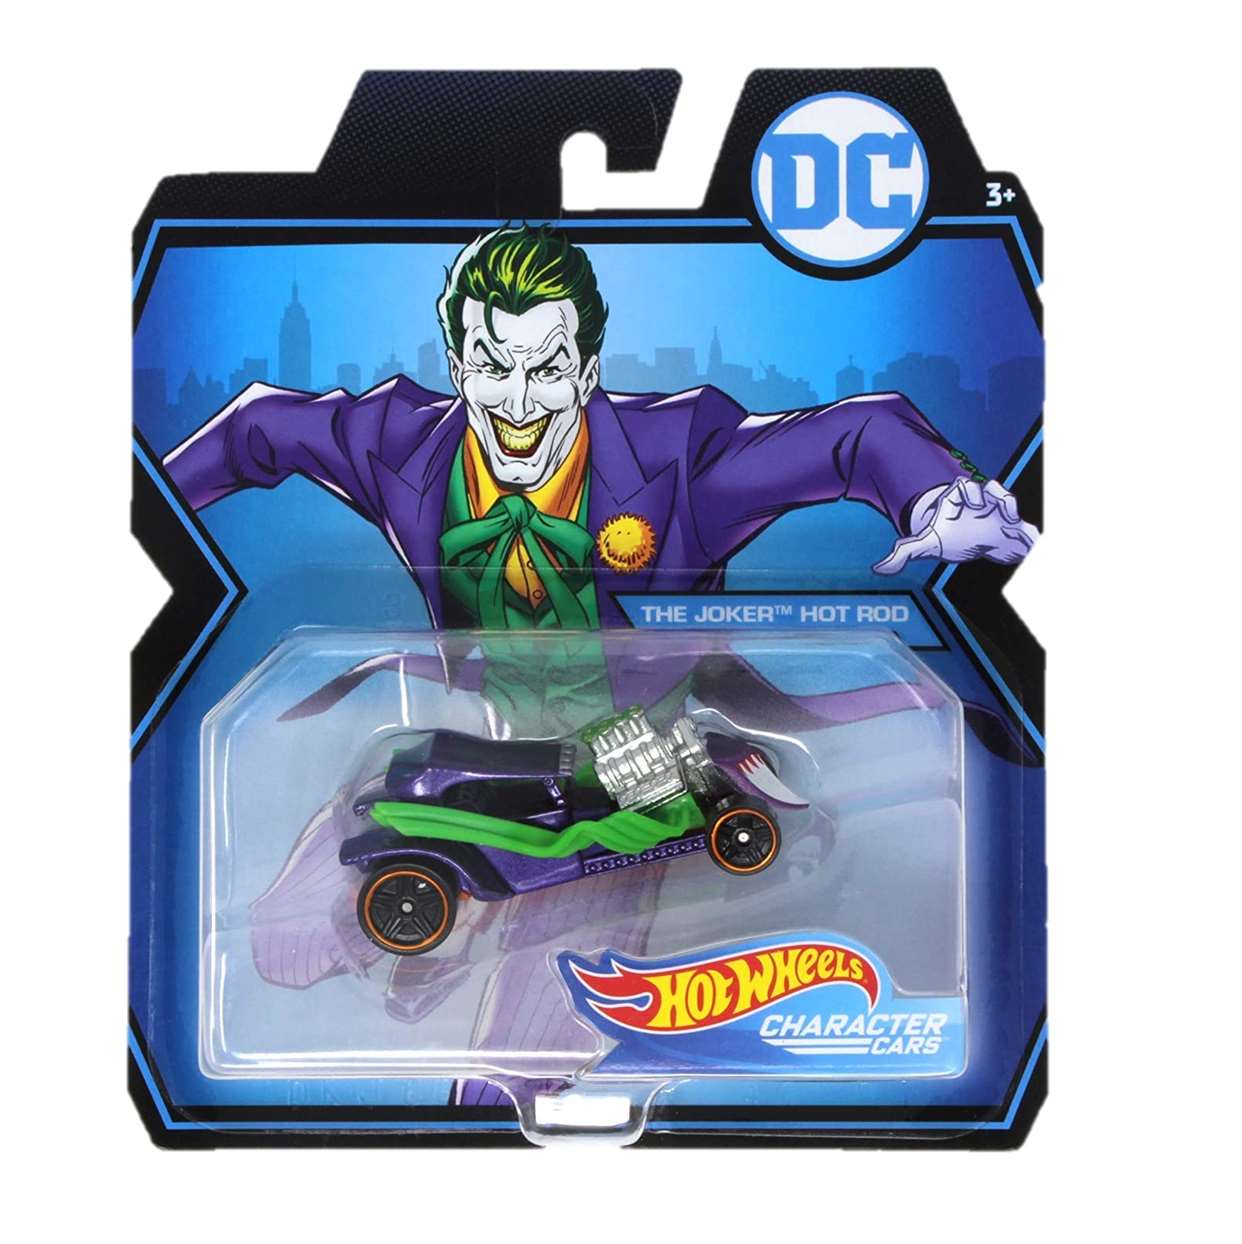 The Joker Hot Rod Gmh97 Hot Wheels Character Cars Die Cast